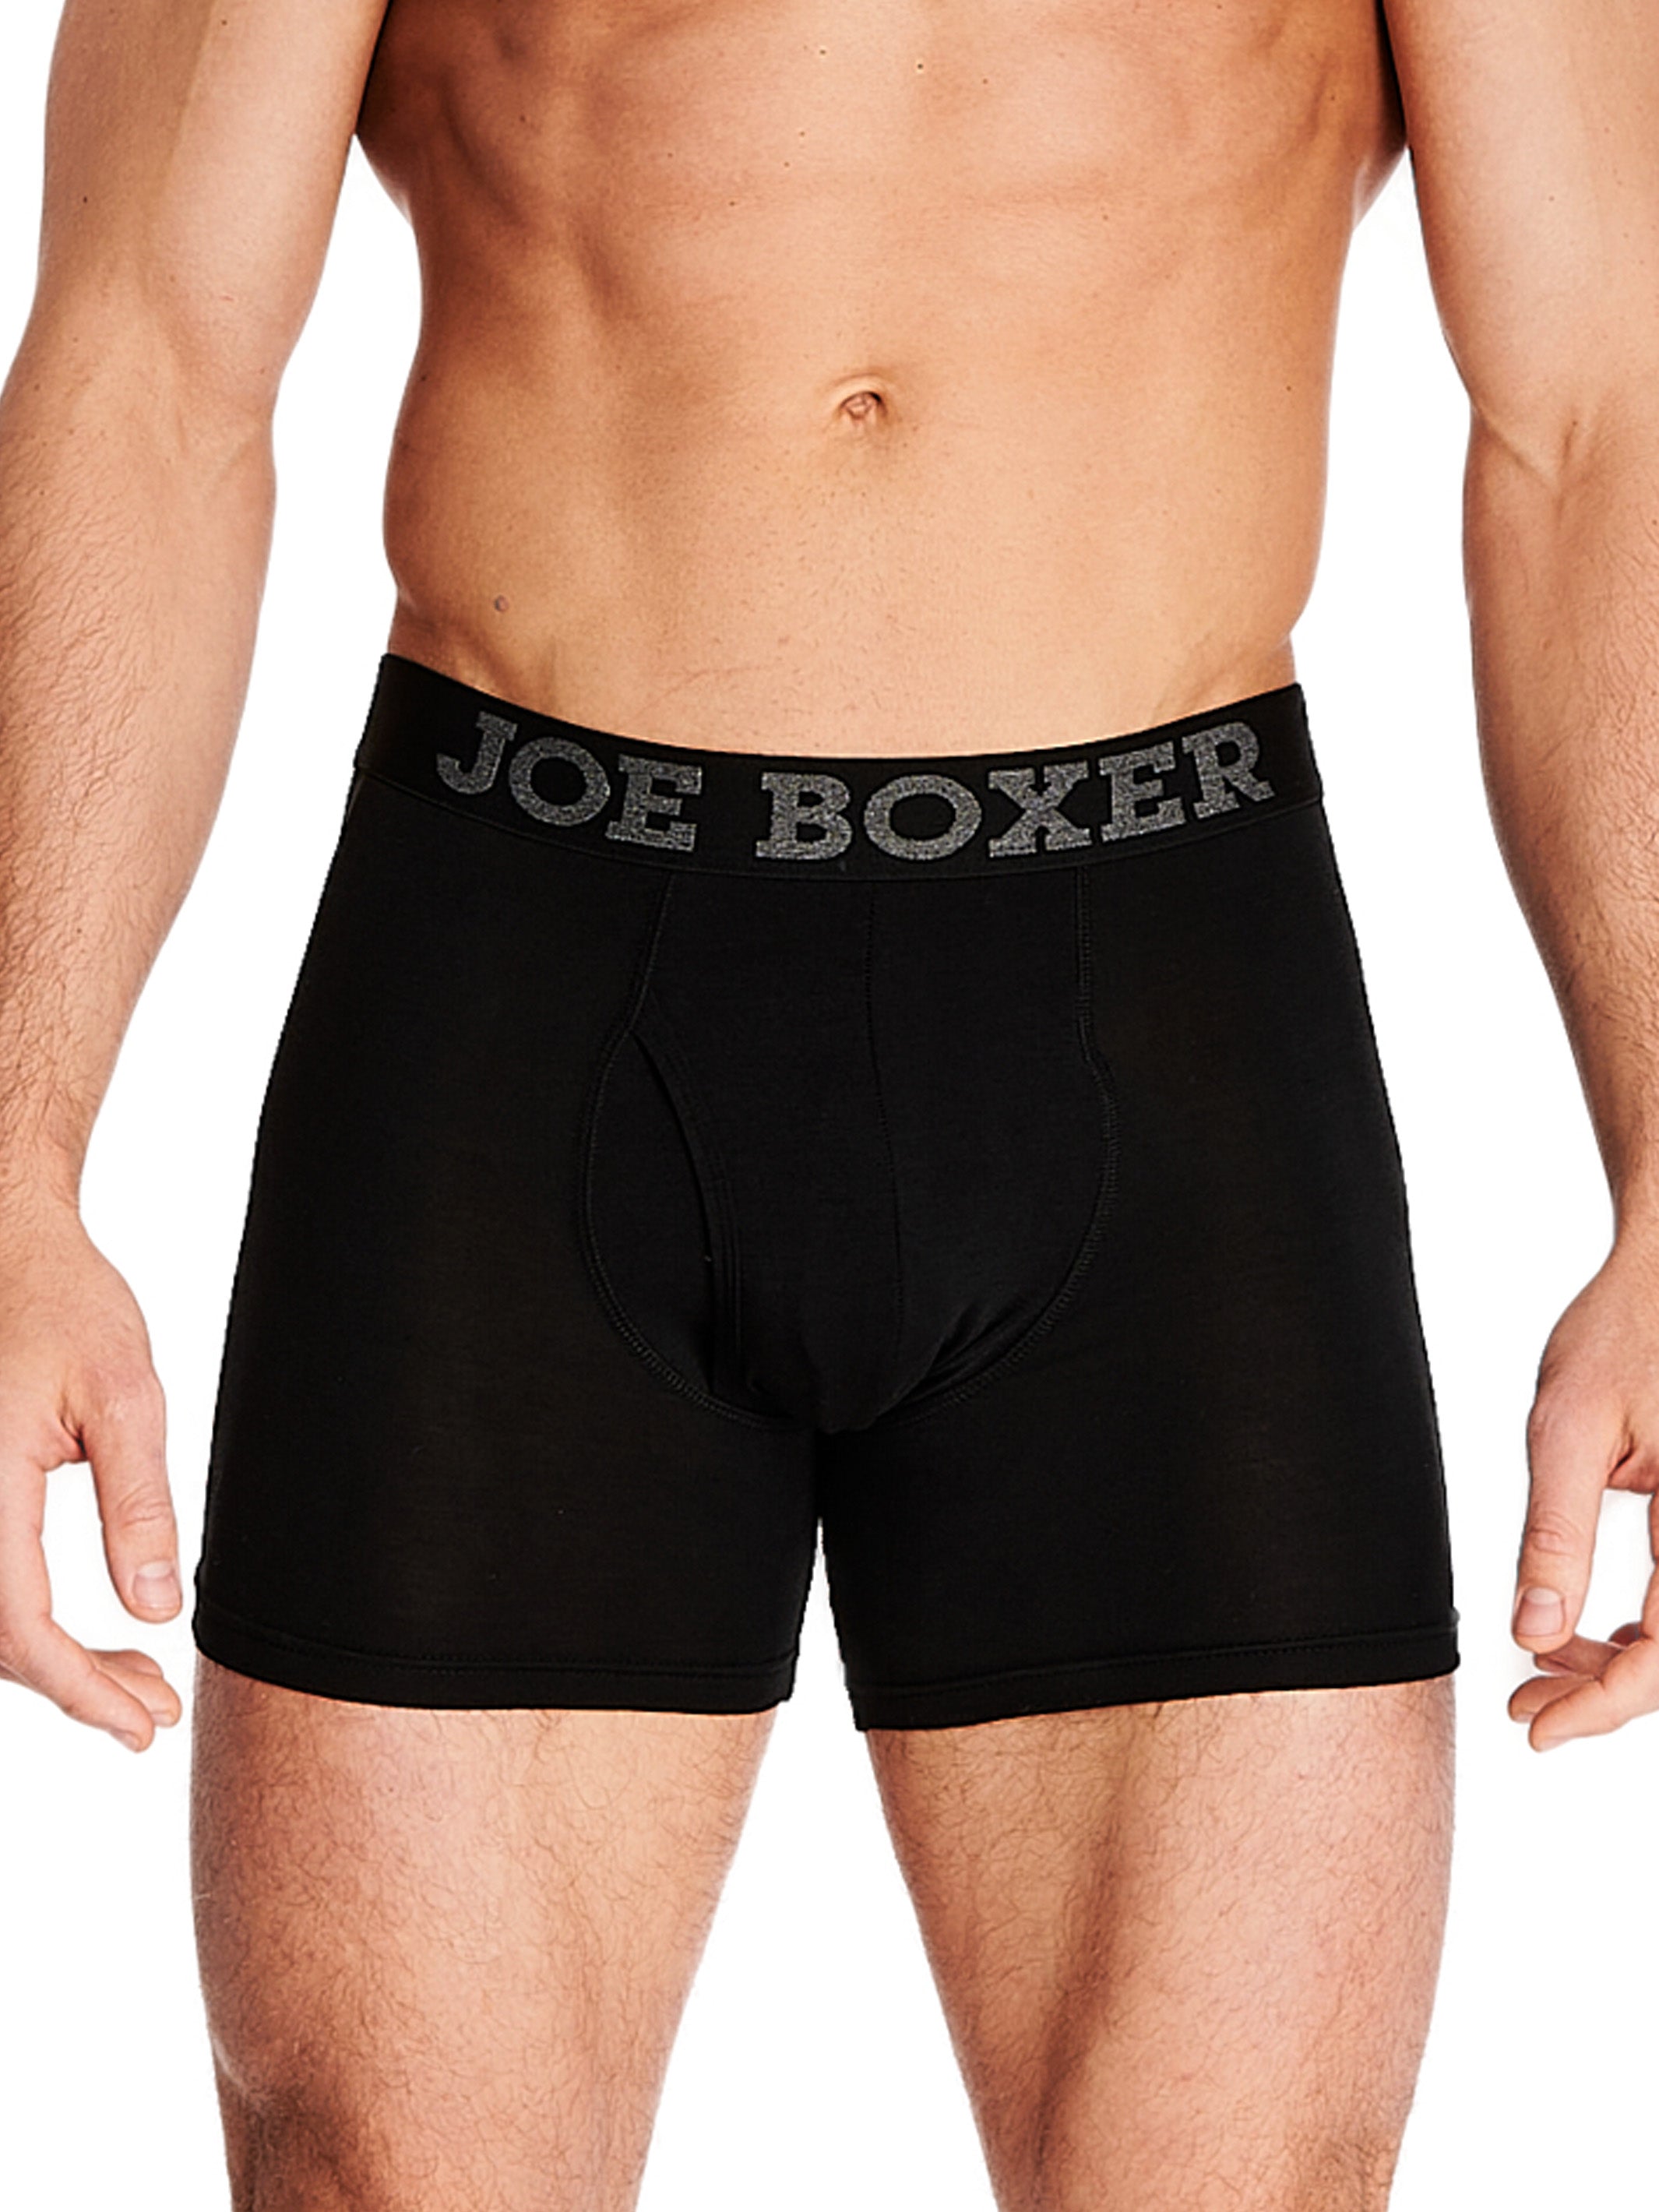 Joe Boxer Sports Bra Black Size XS - $11 - From bri